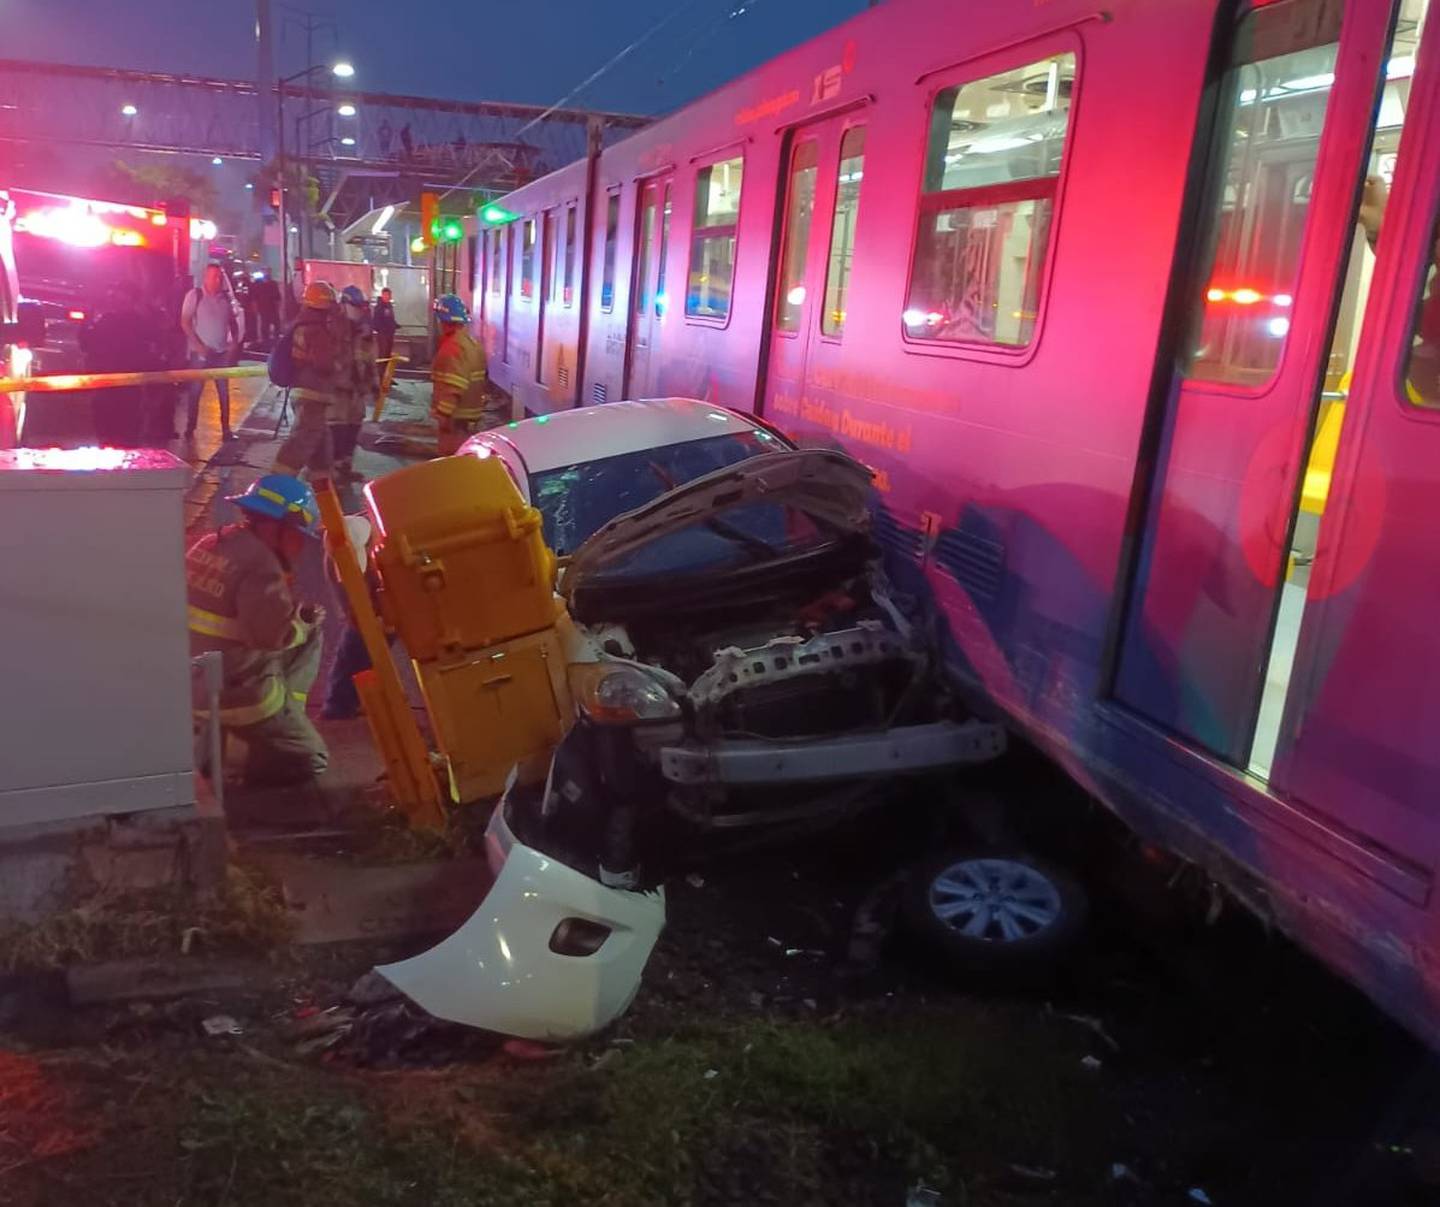 Guadalajara Sufre El Tren Ligero Un Accidente En La L Nea Afecta A Miles Usuarios